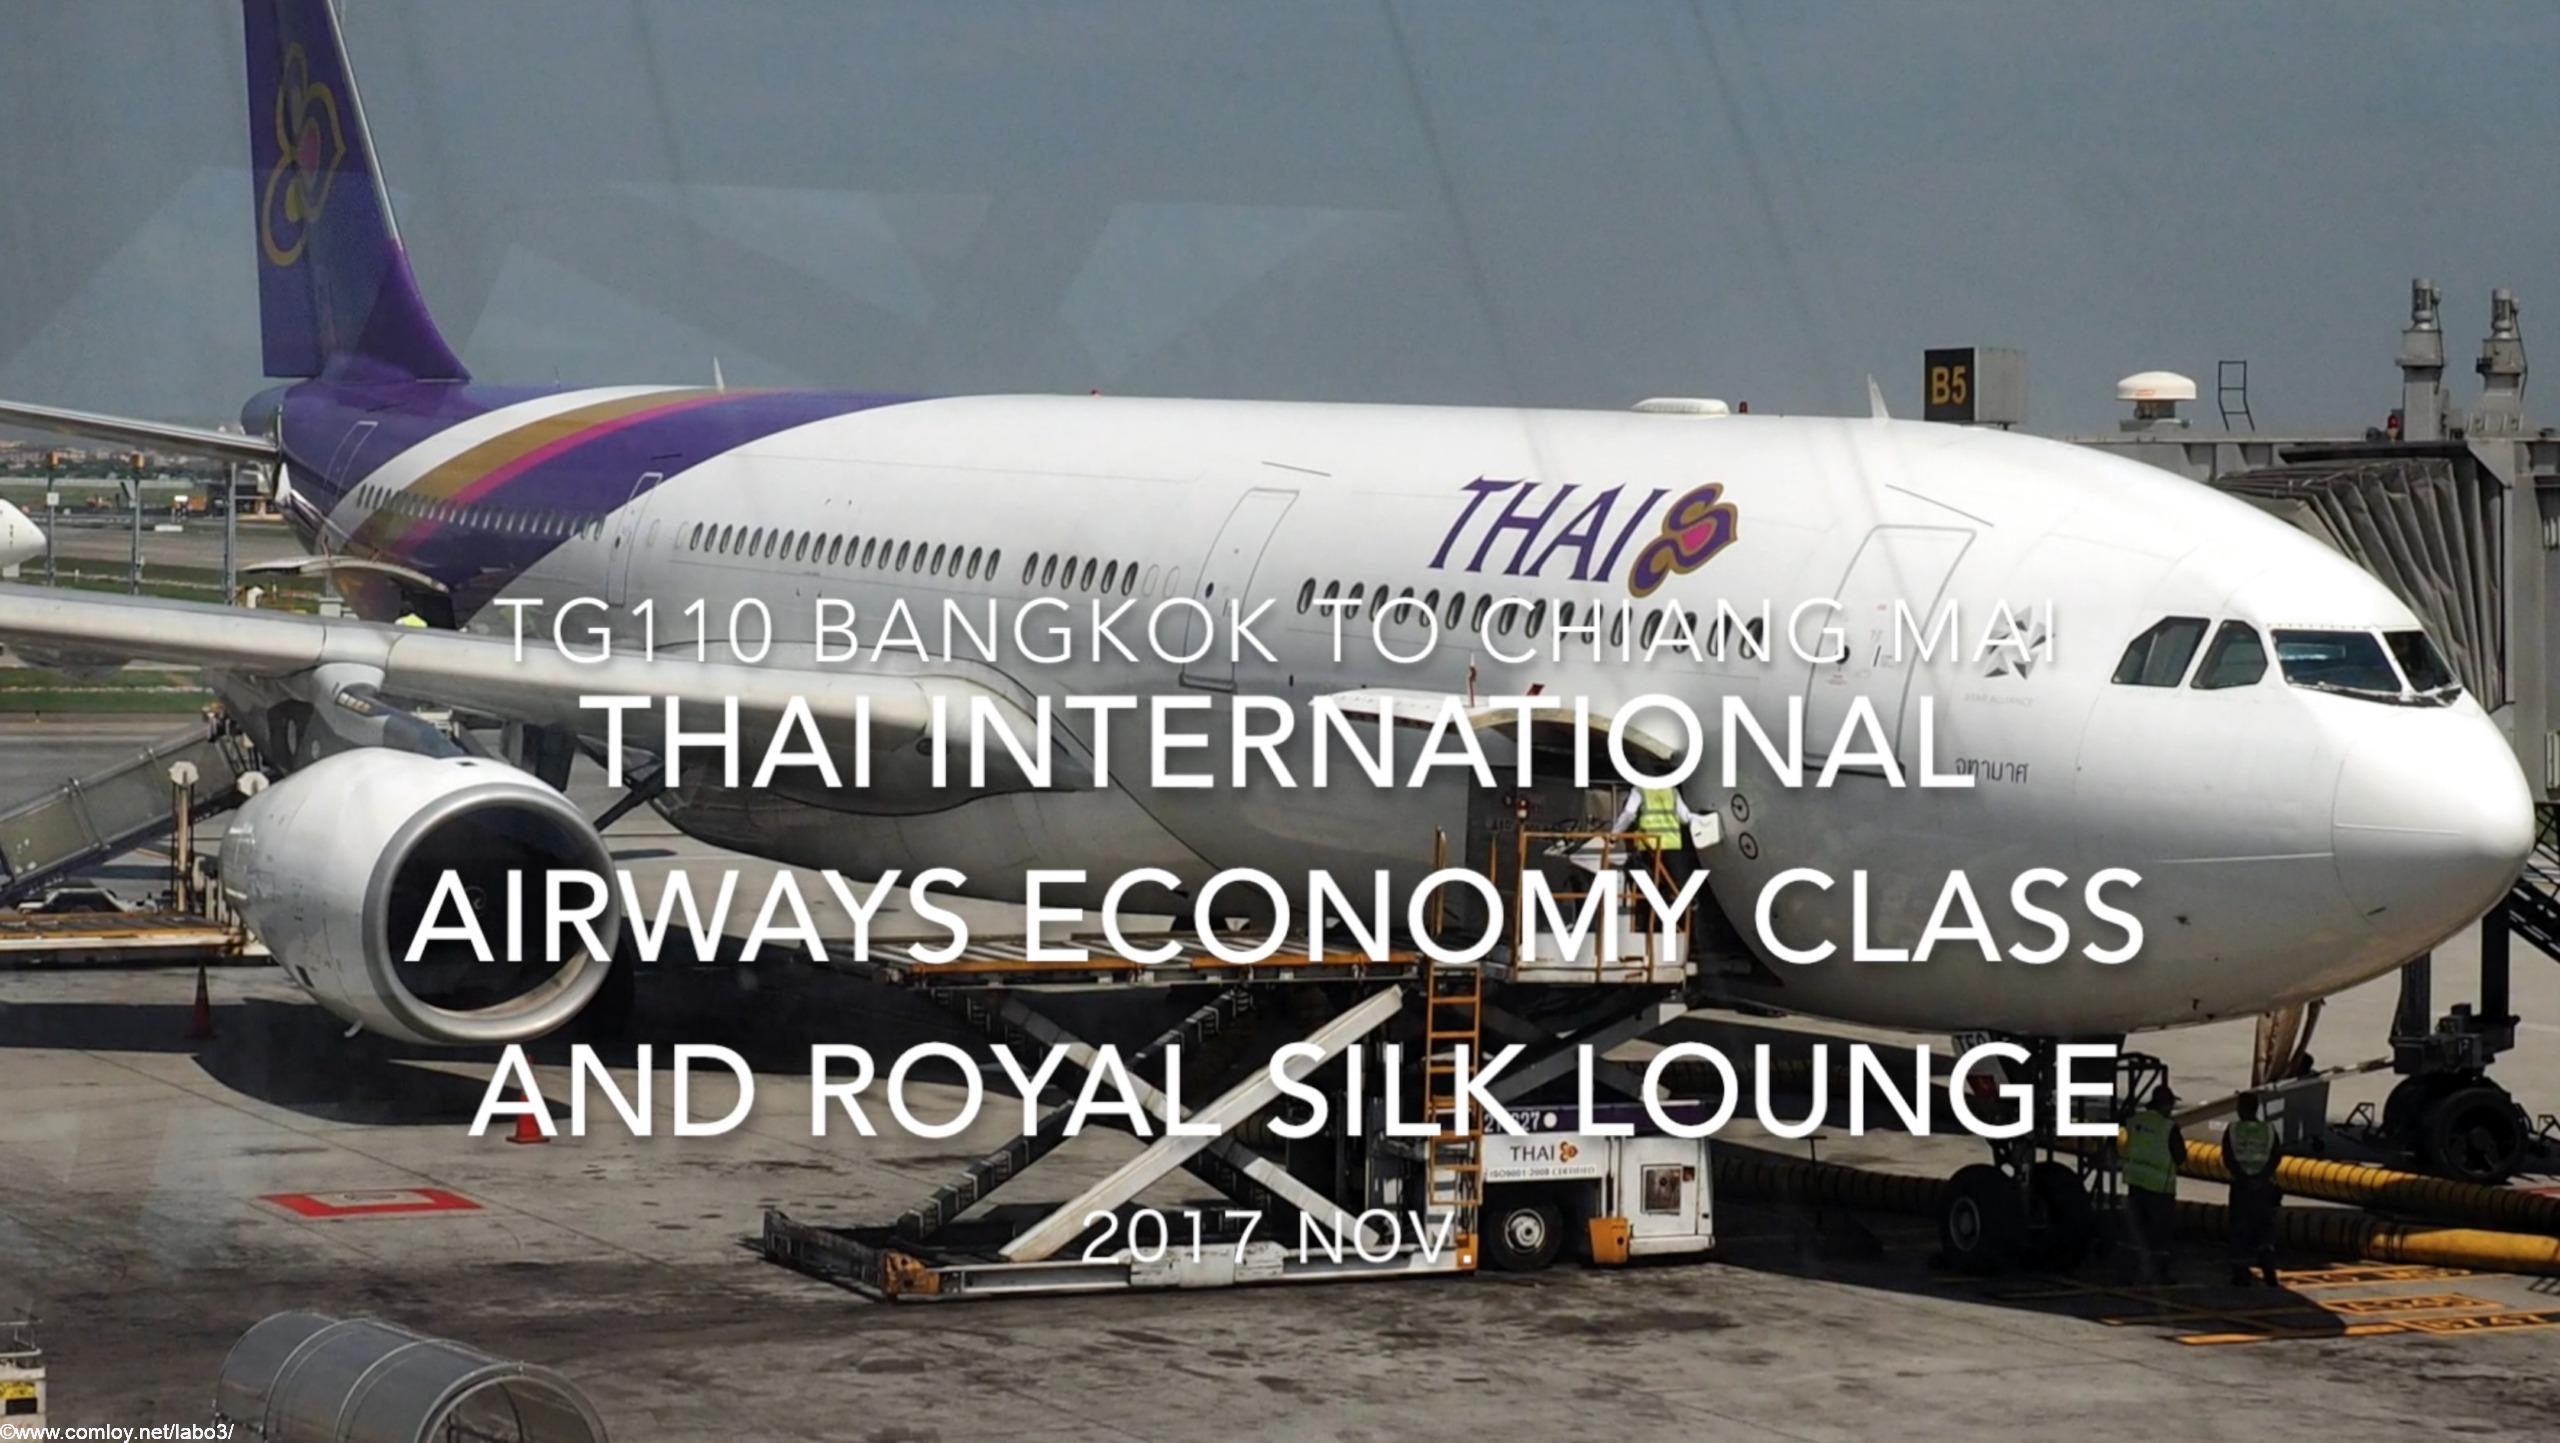 【Flight Report】Thai International Airways Economy Class and Royal Silk Lounge TG110 Bangkok to Chiang Mai 2017・11 タイ国際航空 エコノミークラス搭乗記